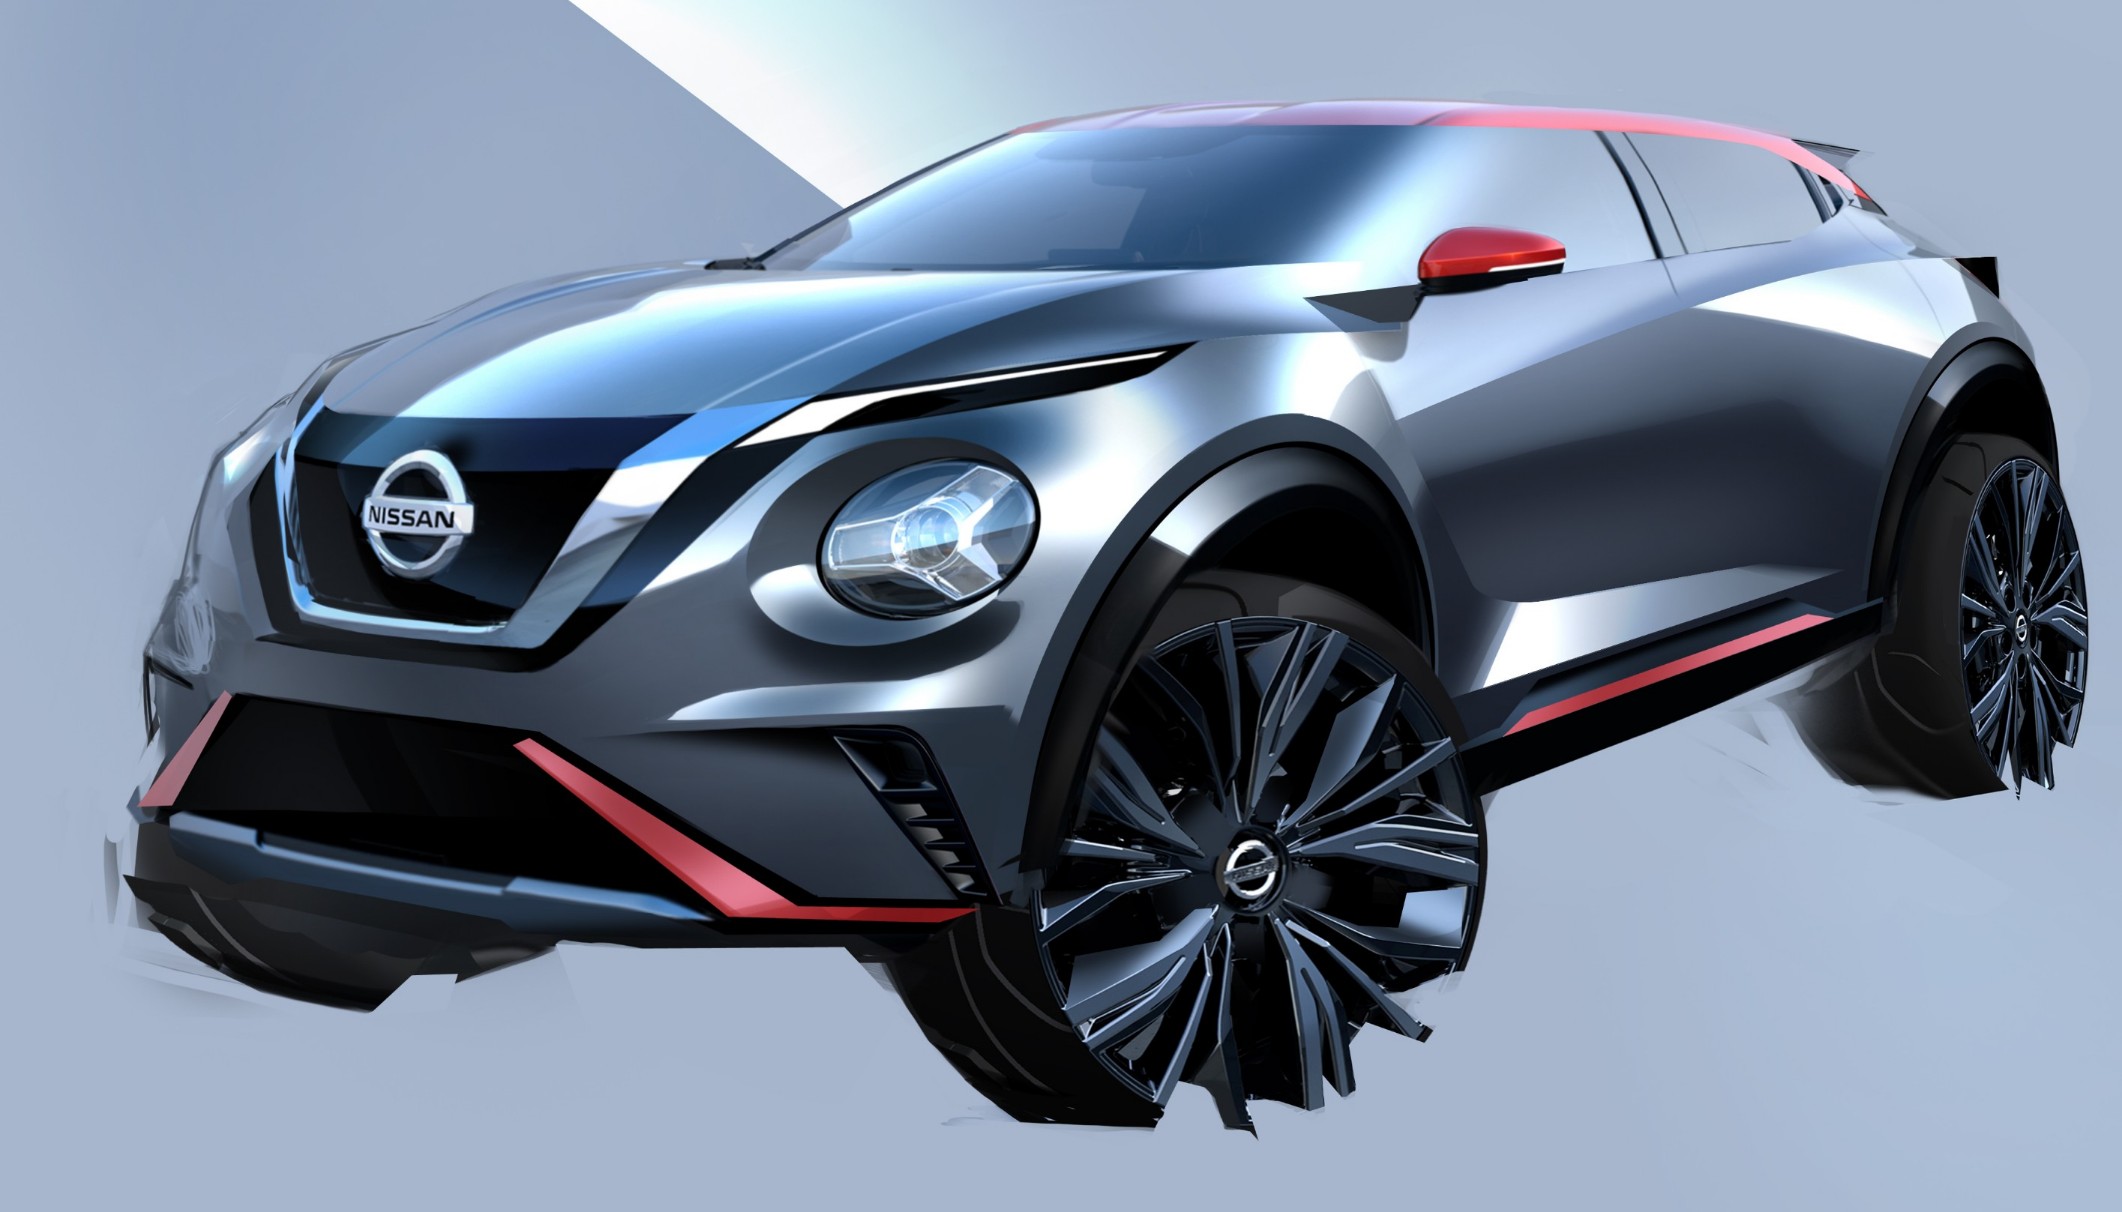 Oct. 7 – 2pm CET – New Nissan JUKE Design CGI 5-2830×1617-2122×1212